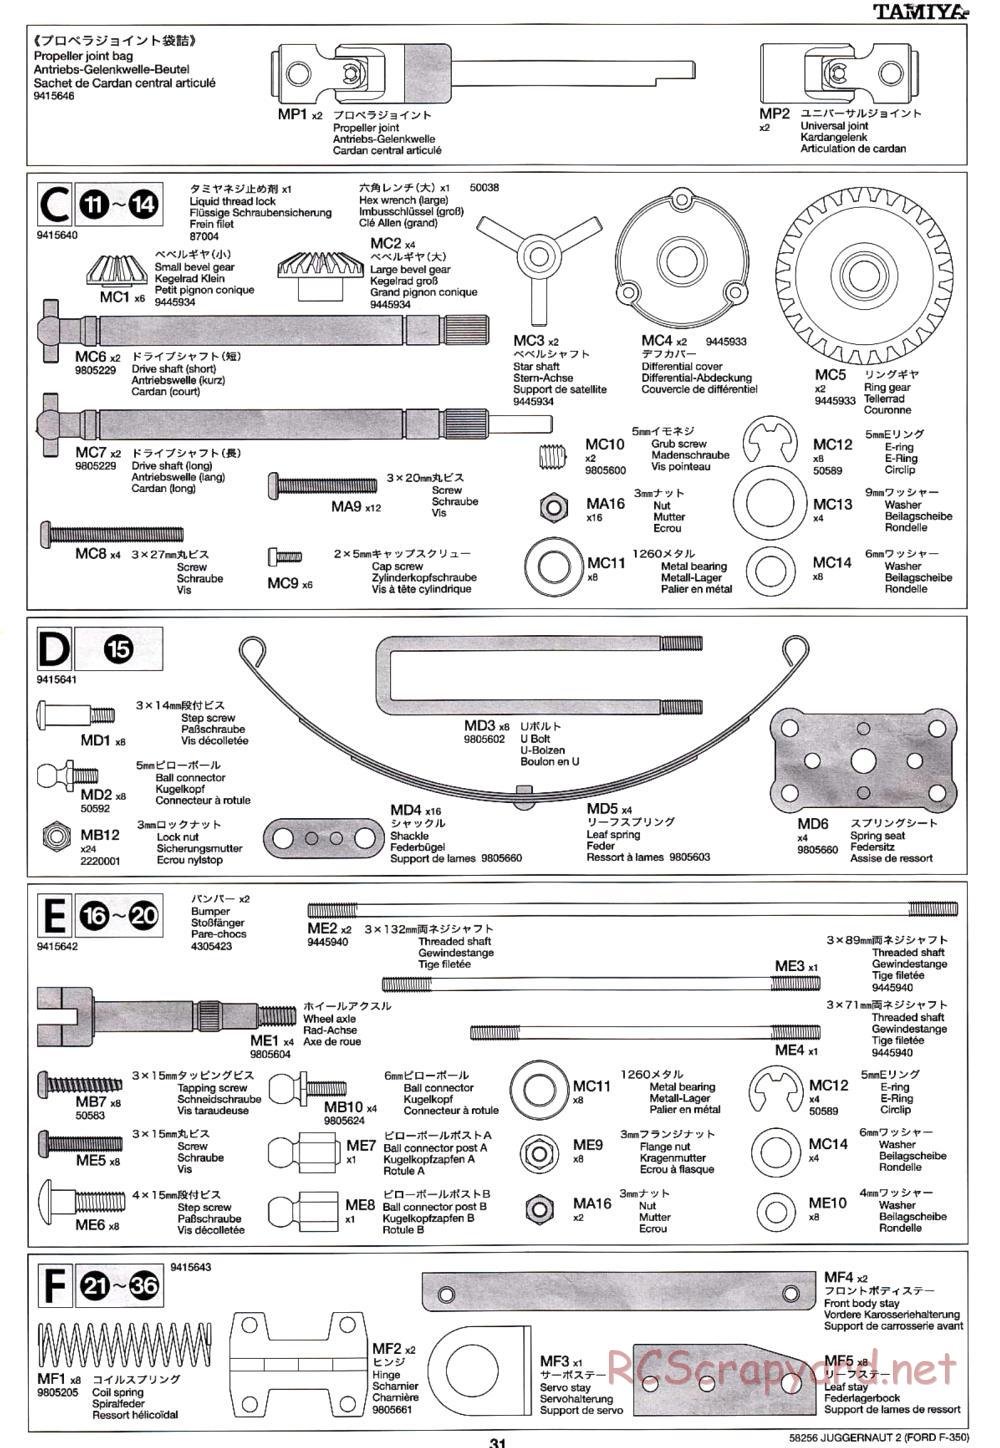 Tamiya - Juggernaut 2 Chassis - Manual - Page 31